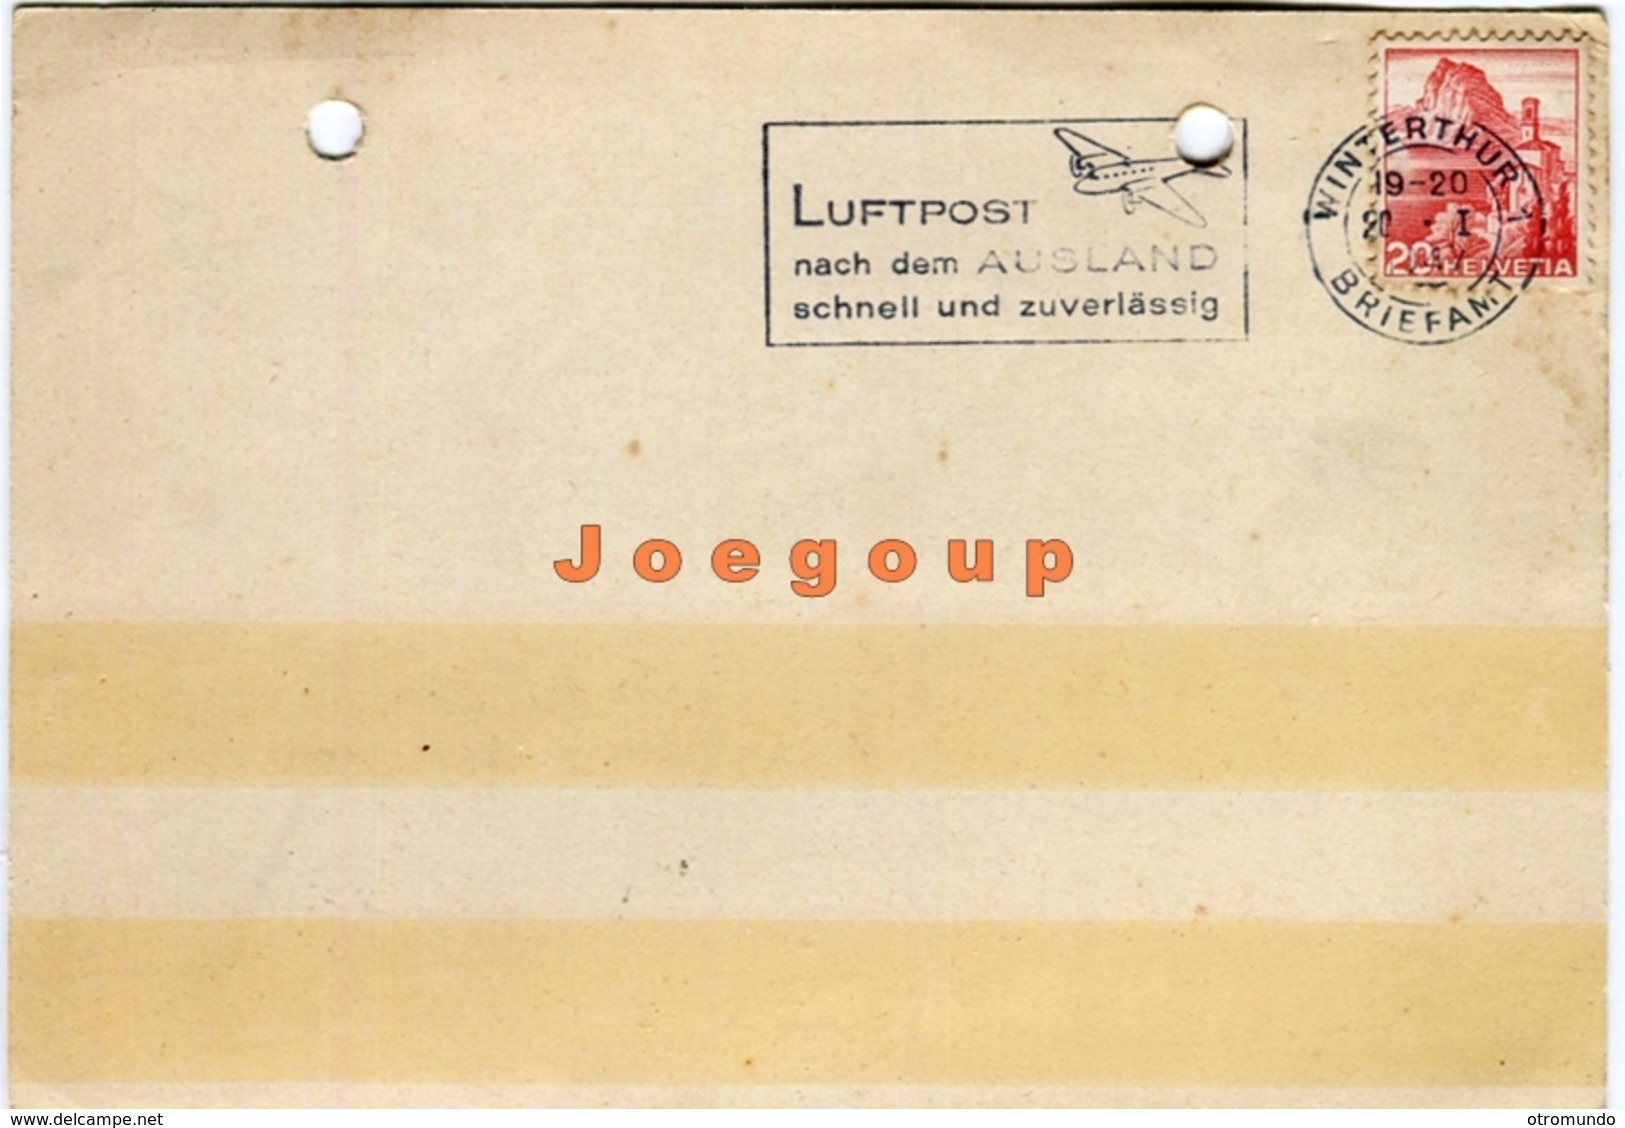 Postkarte Luftpost Gelatinefabrik Winterhur Schweiz Helvetia 1947 Quilmes Argentina Poststempel - Used Stamps